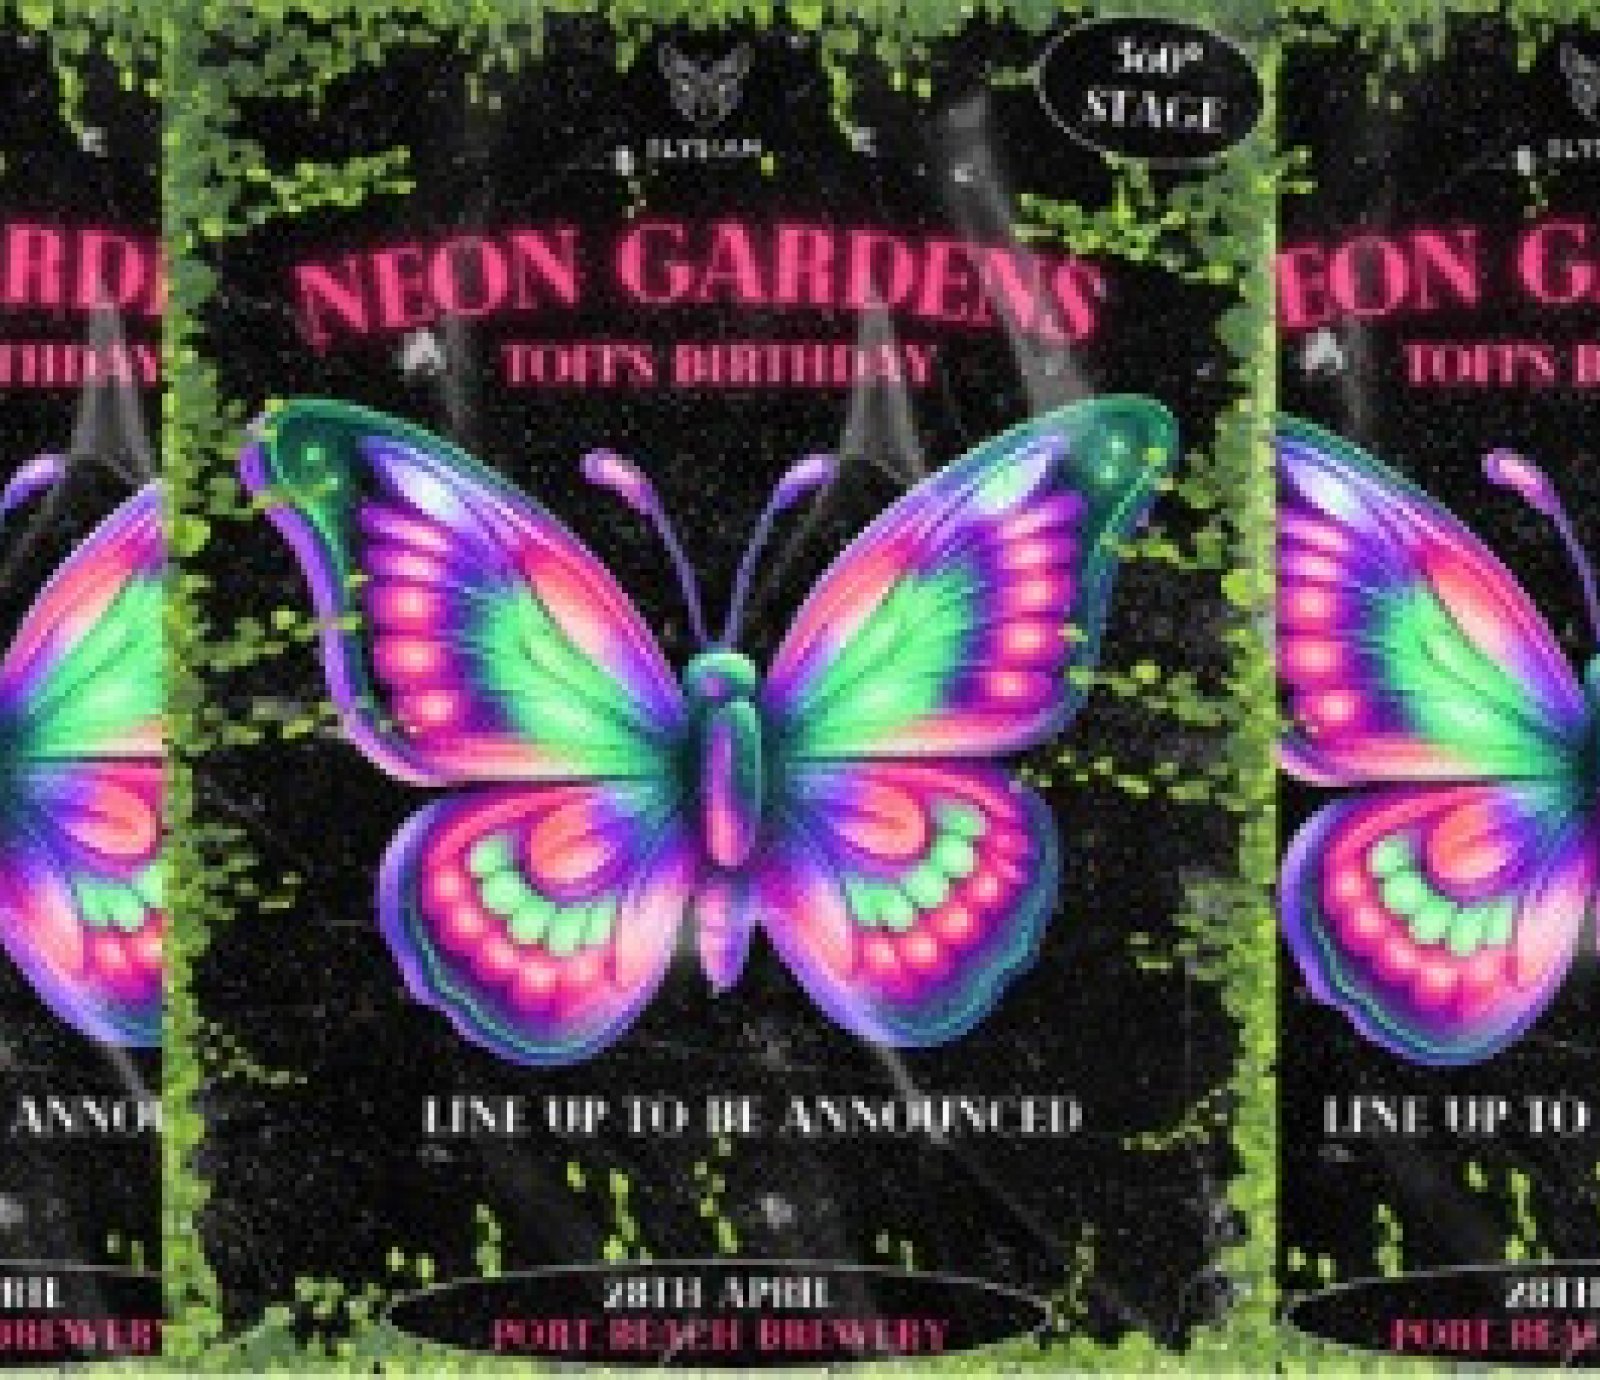 Neon Gardens - Tofi's birthday edition